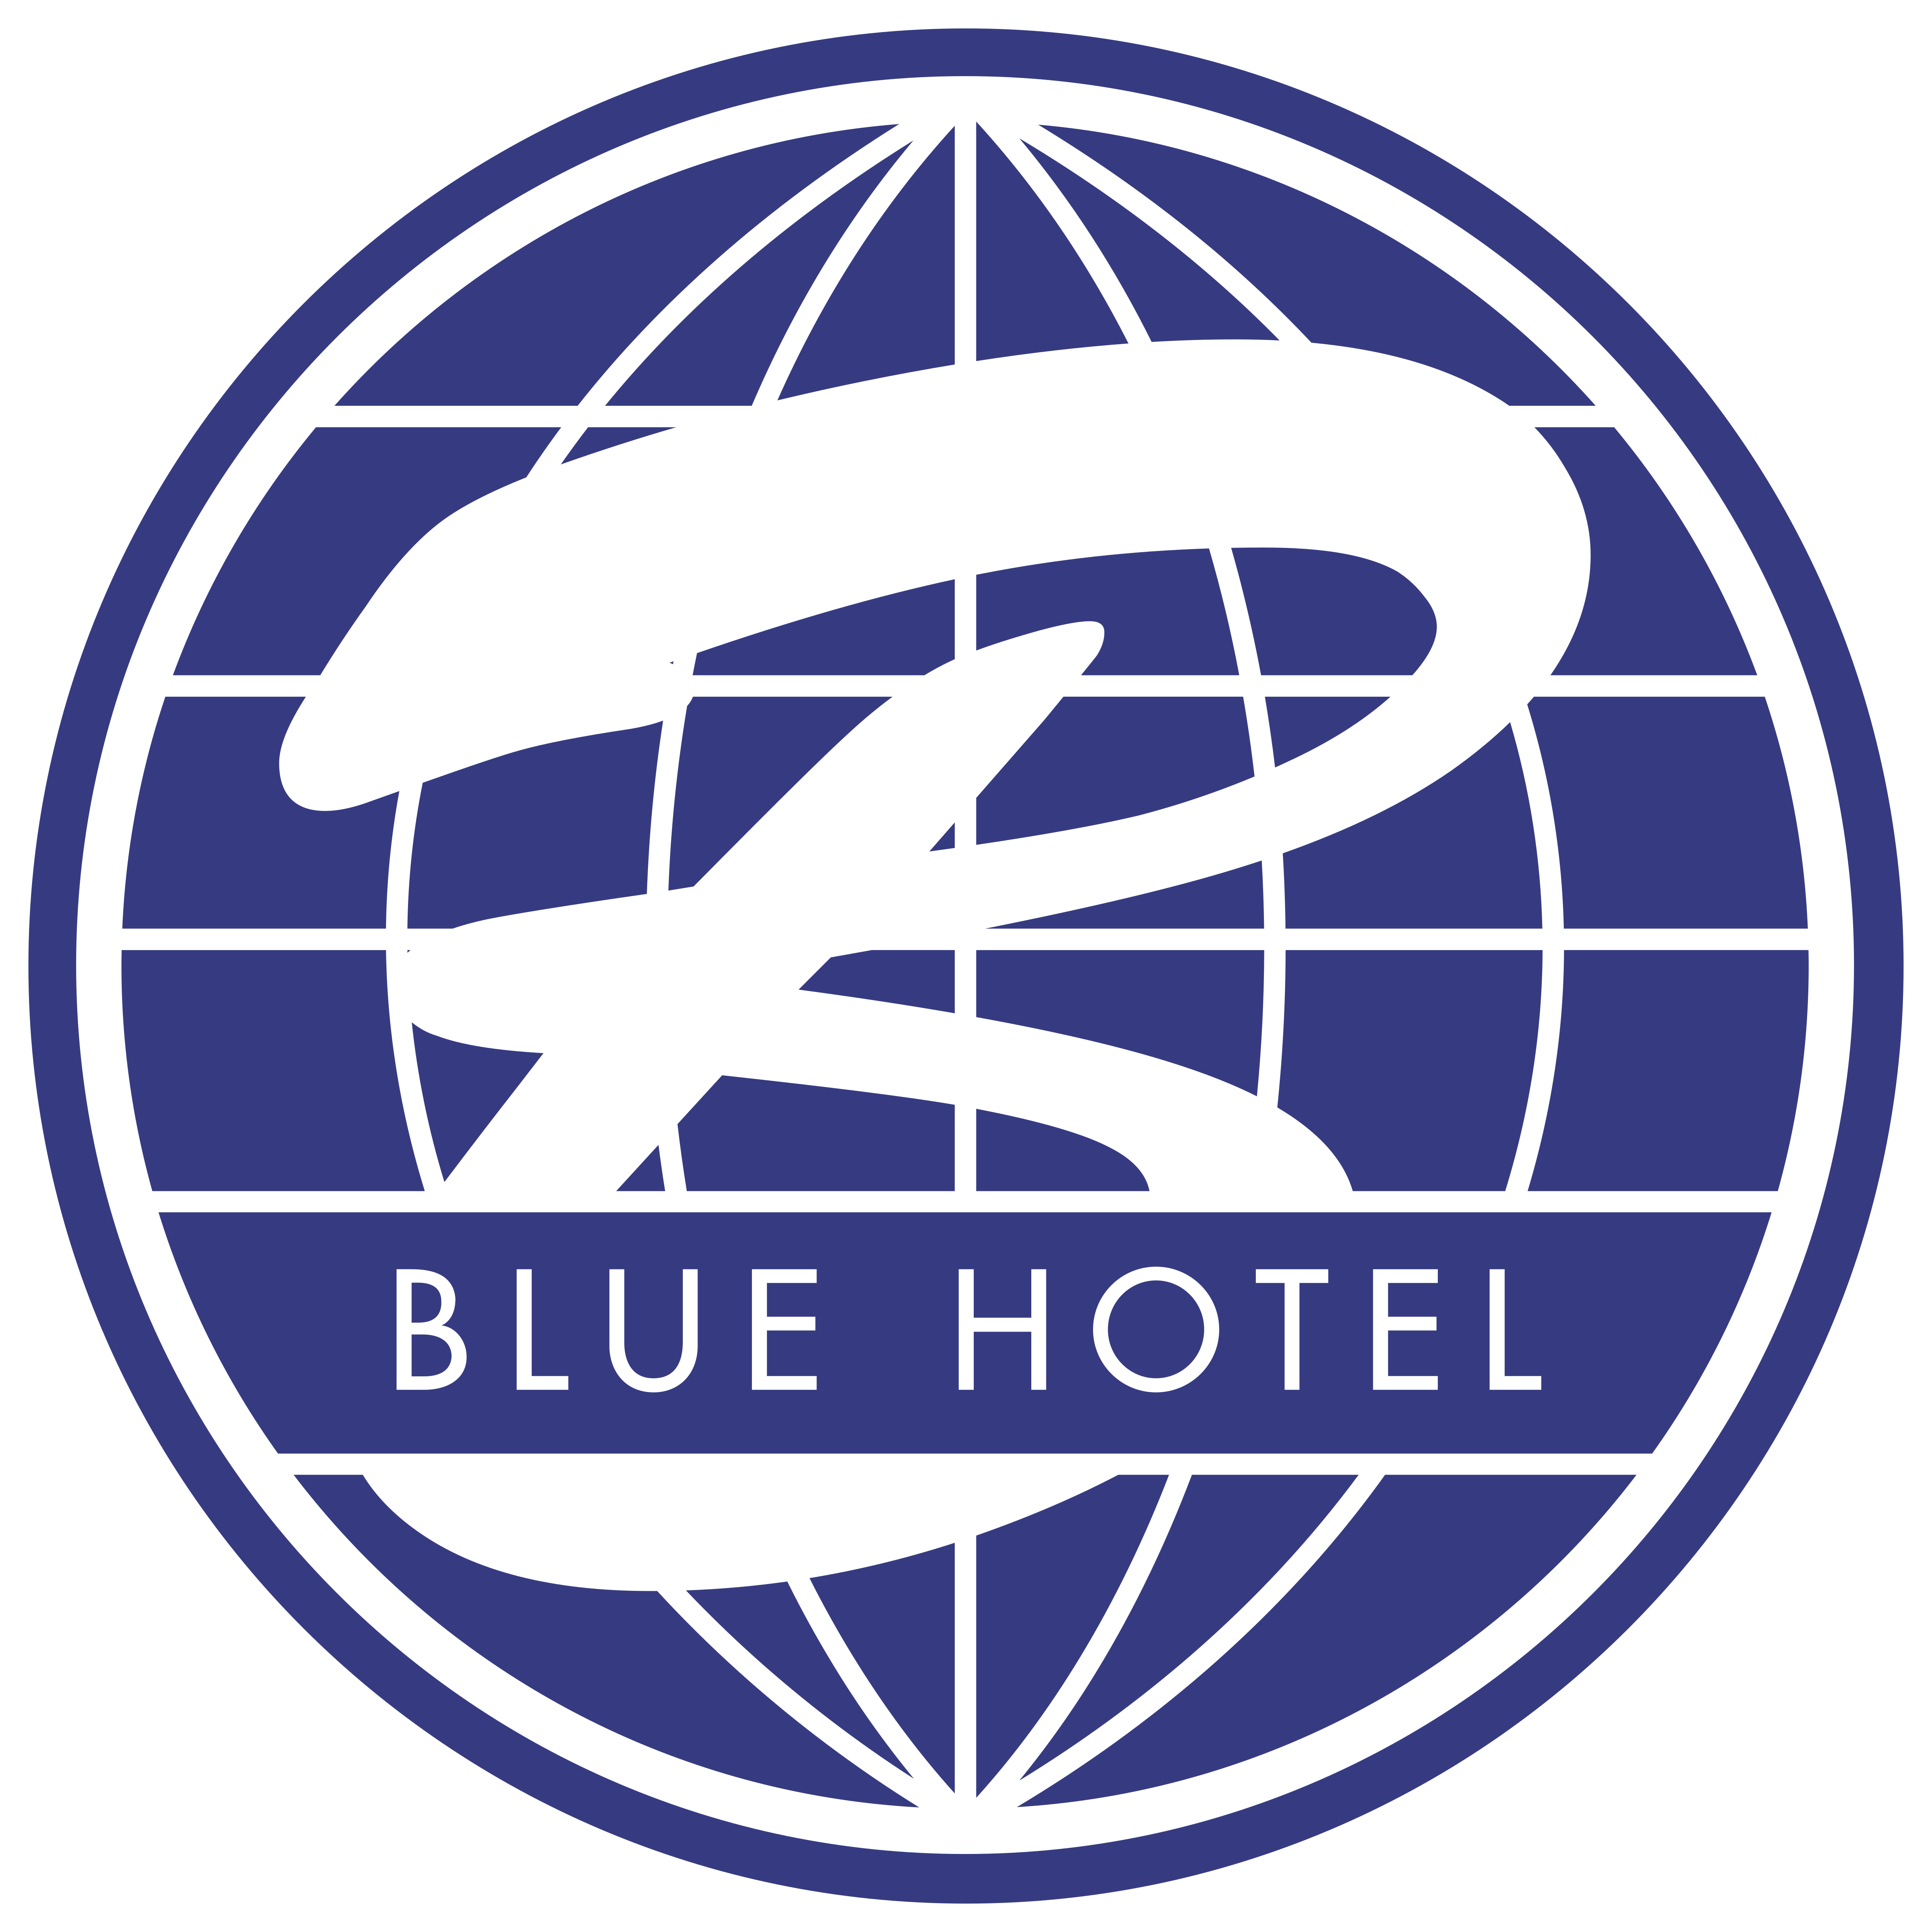 Hotel Logos Hotel Logos - Bank2home.com